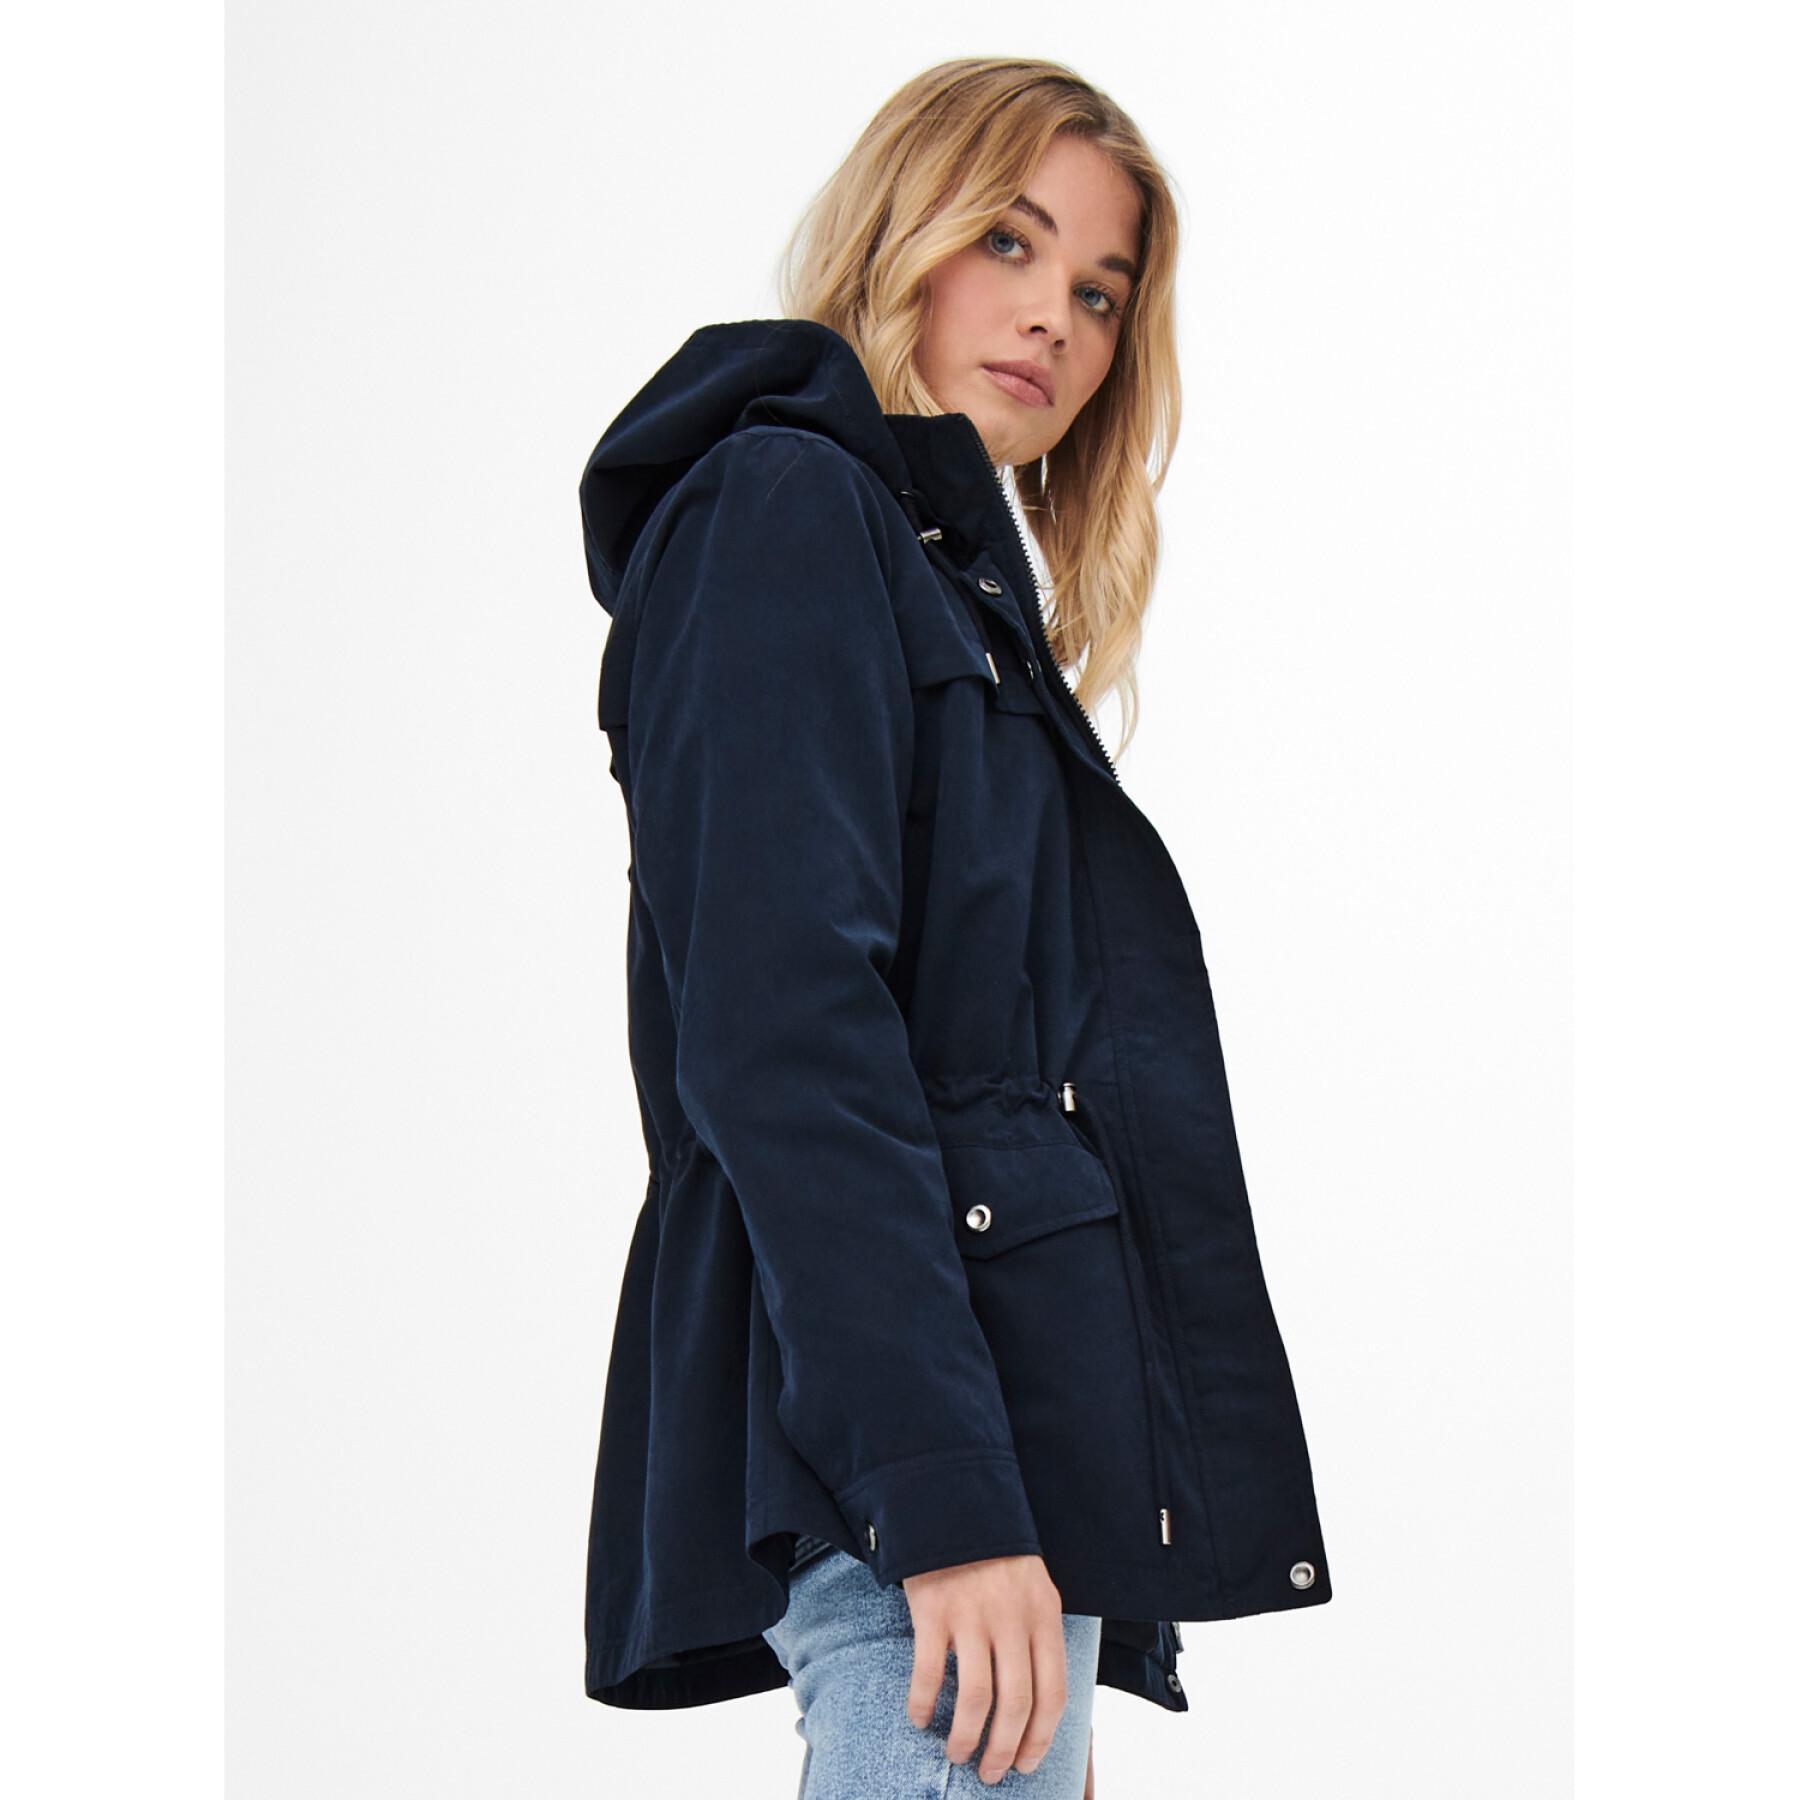 Women's hooded jacket Only onlnewstarline spring